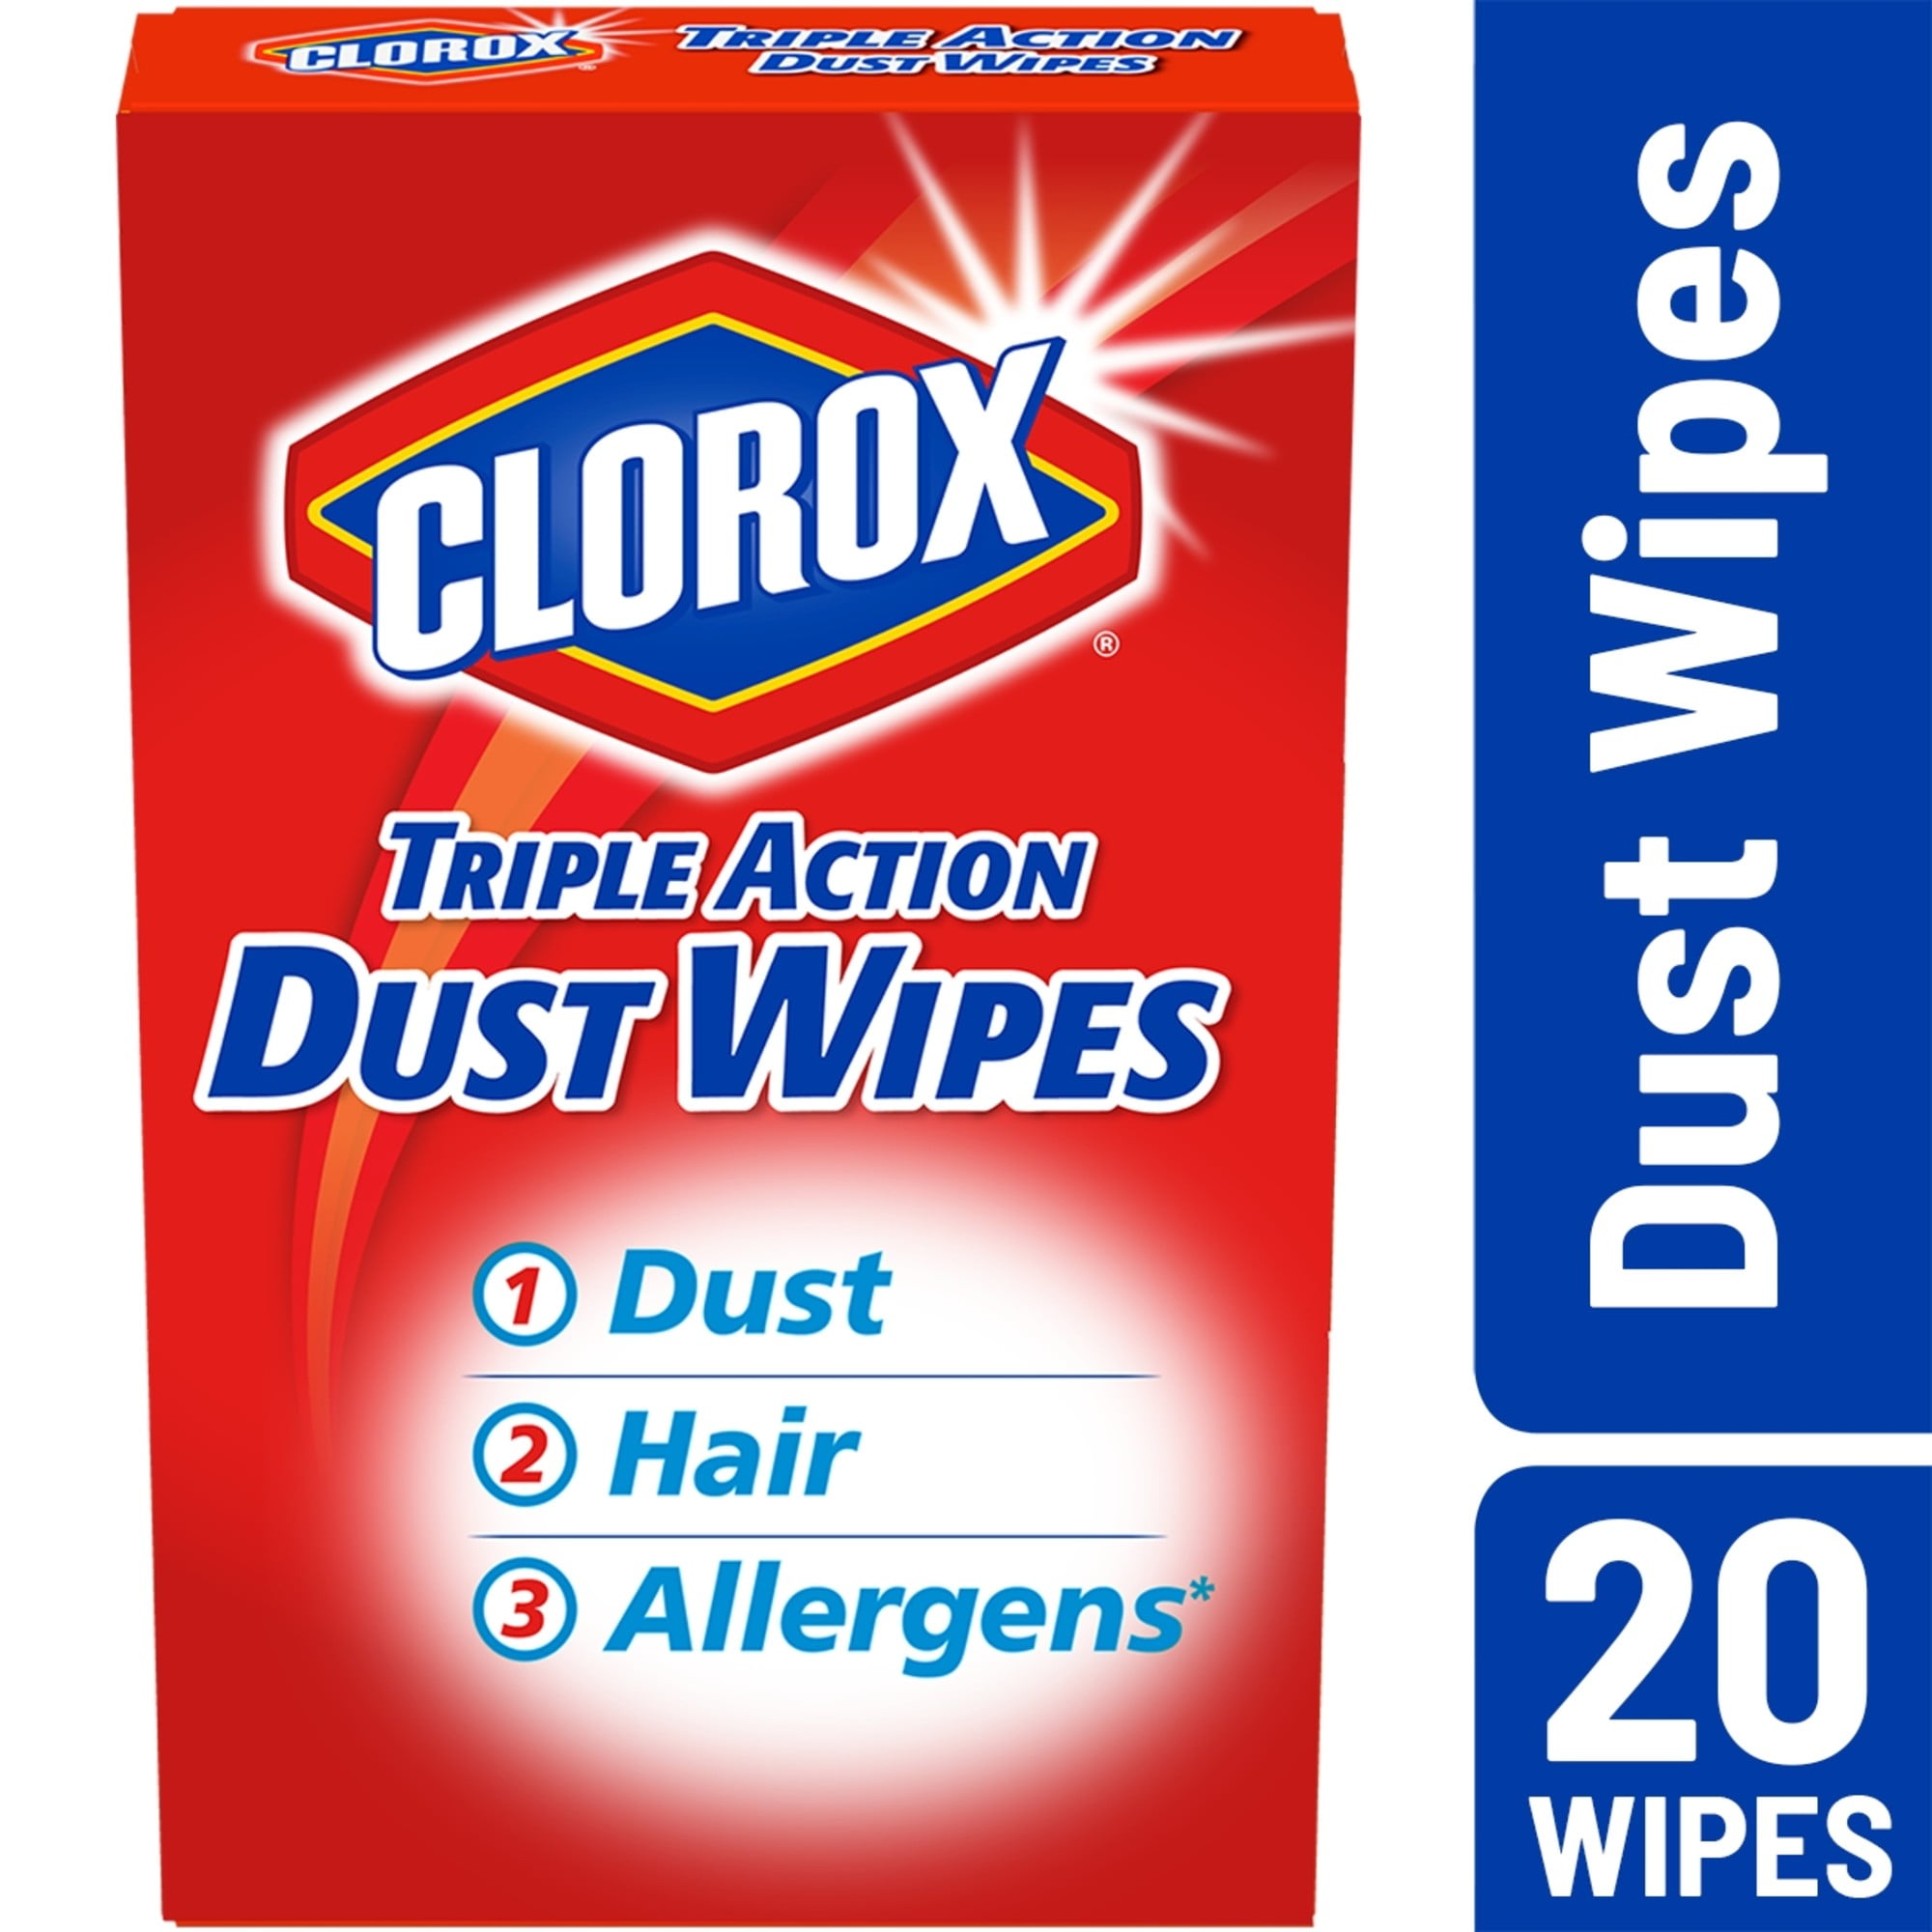 Triple Action Dust Wipes, White, 8 1/2 x 10, 26/Box